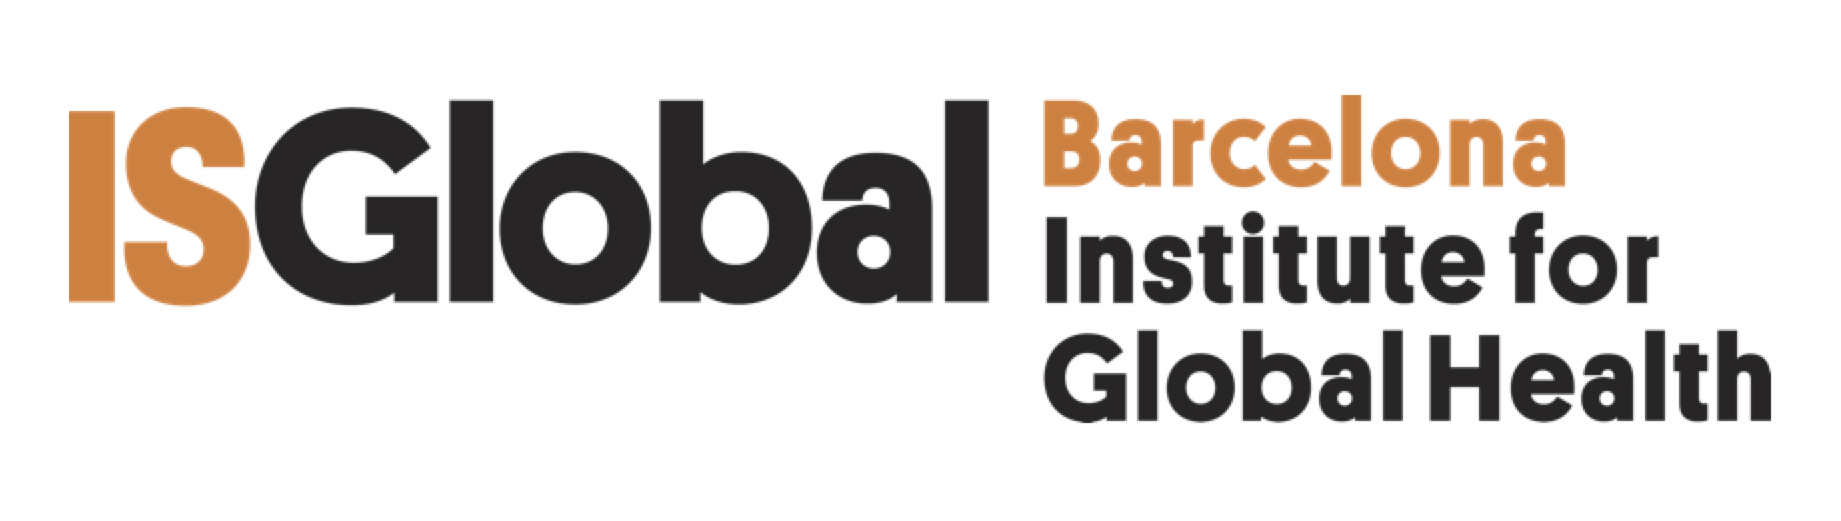 ISGlobal - Barcelona Institute for Global Health